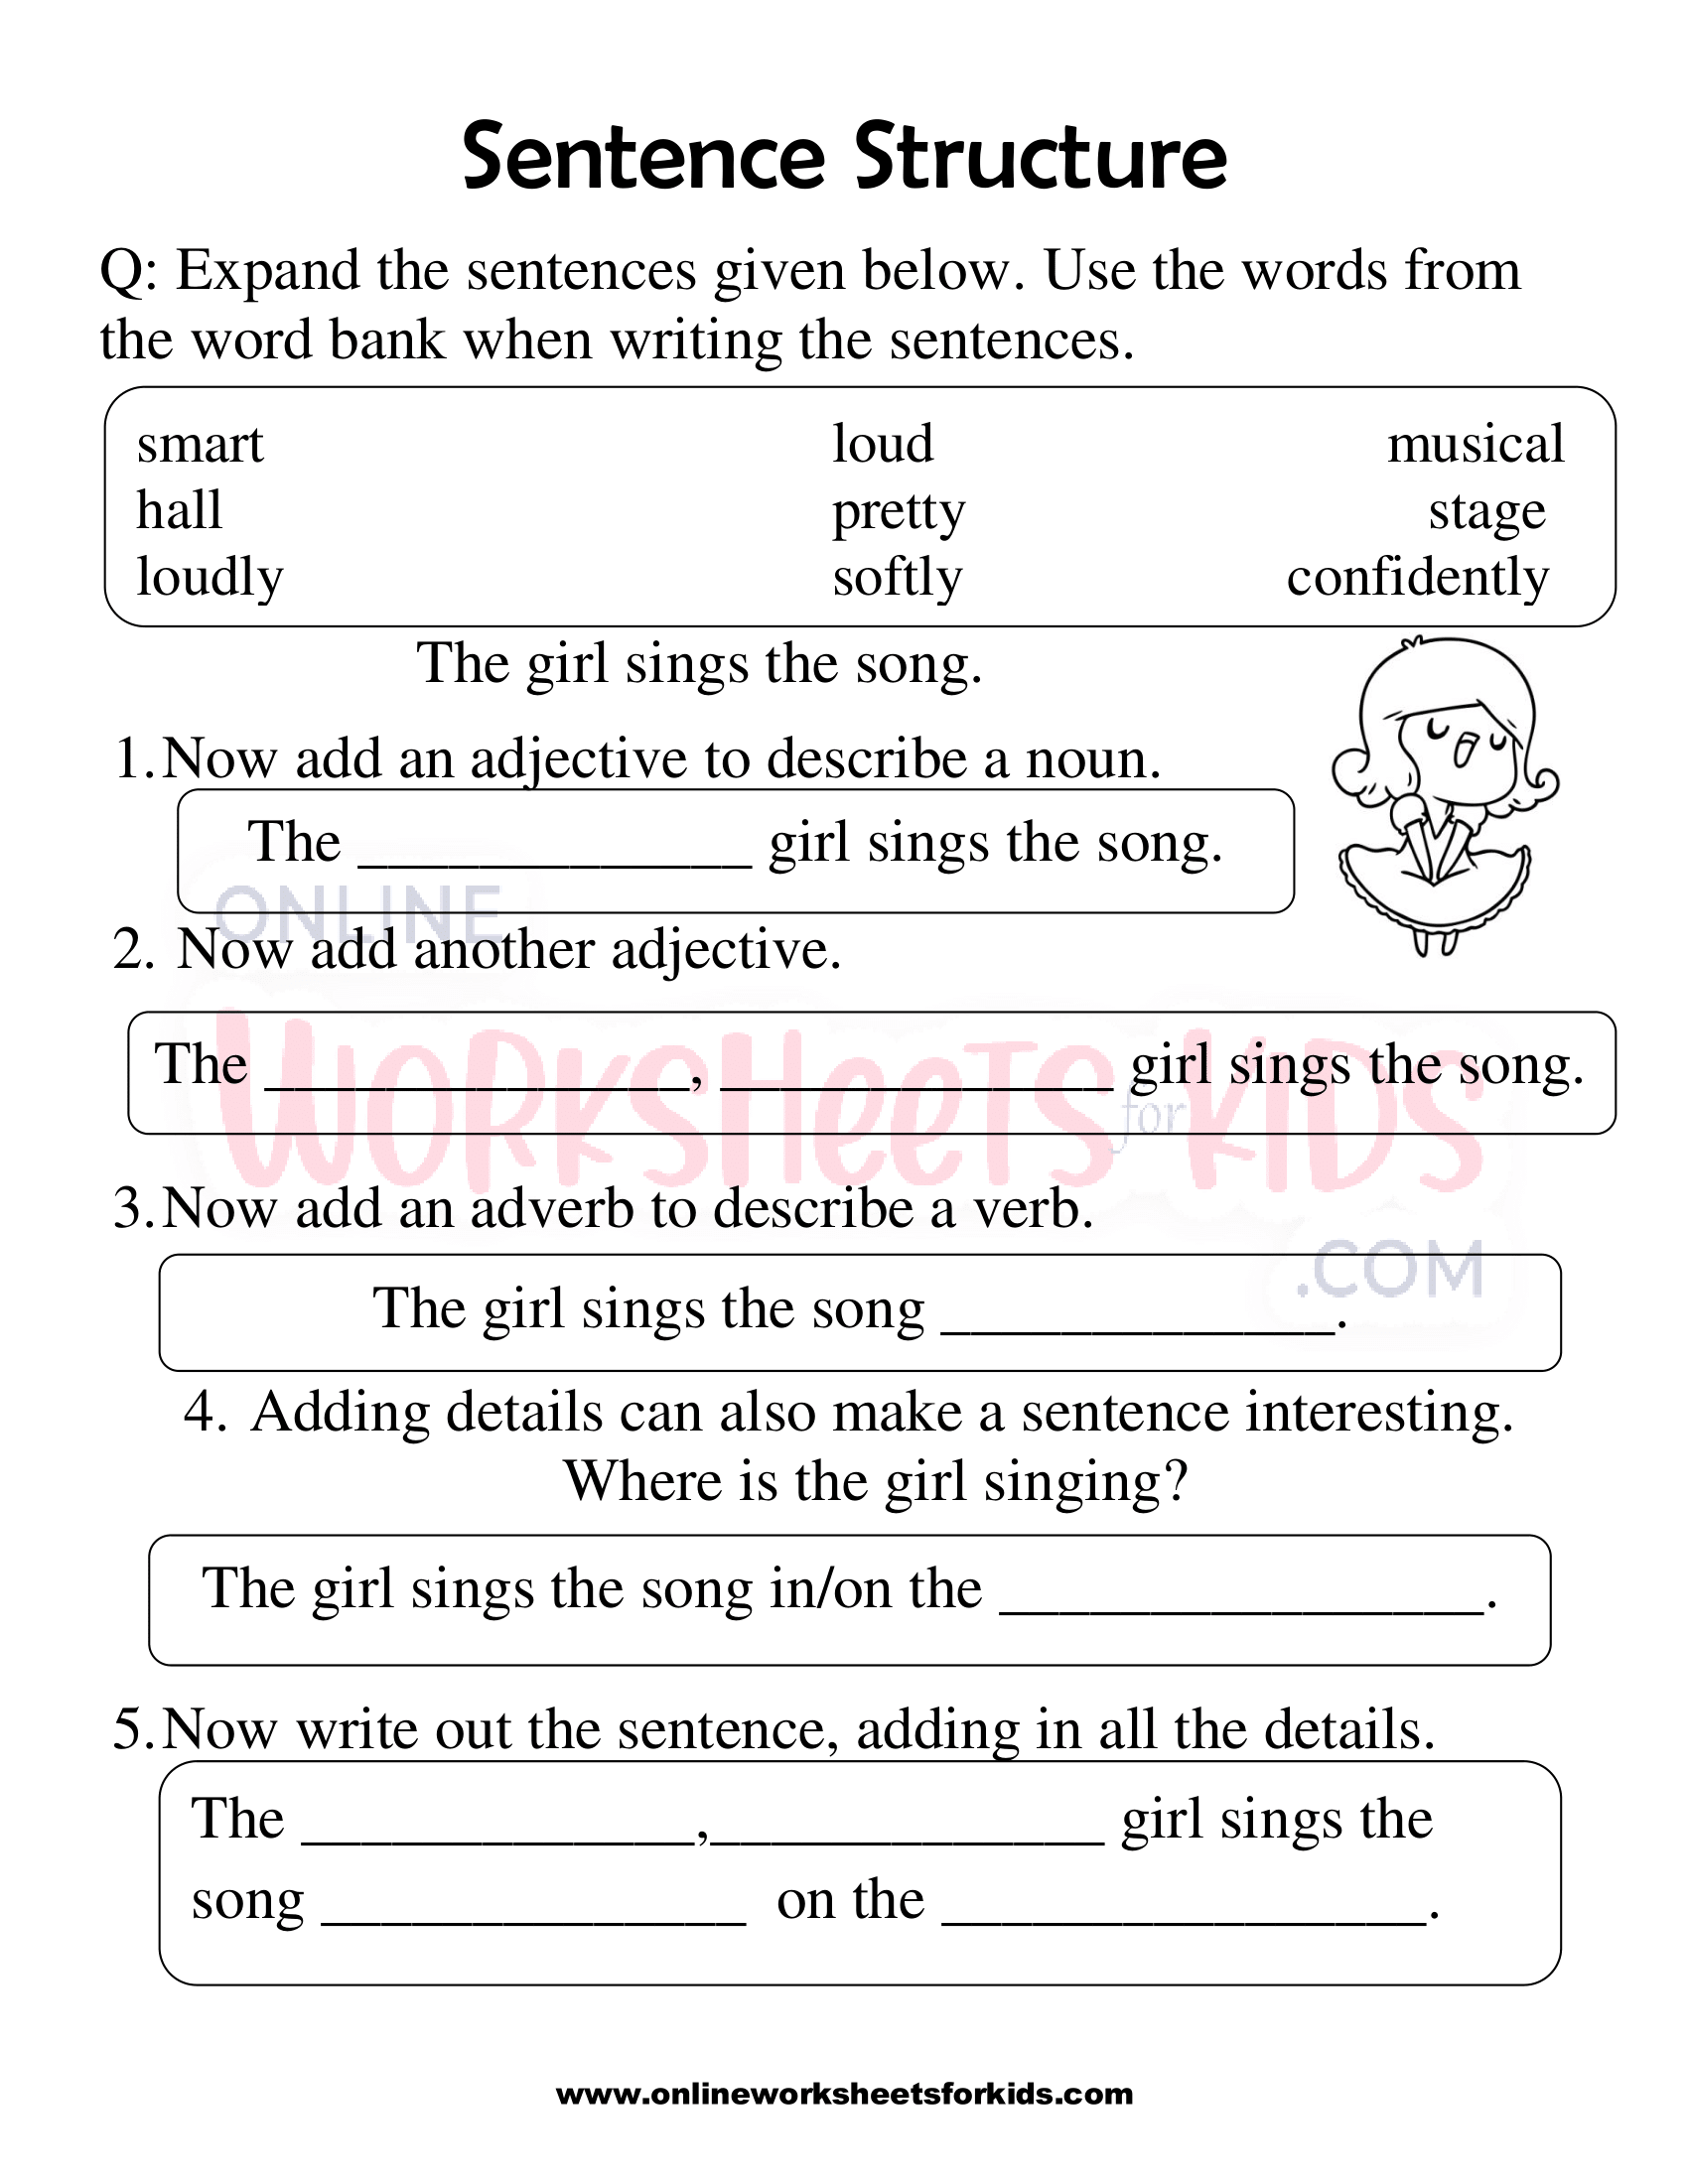 free-sentence-structure-worksheets-1st-grade